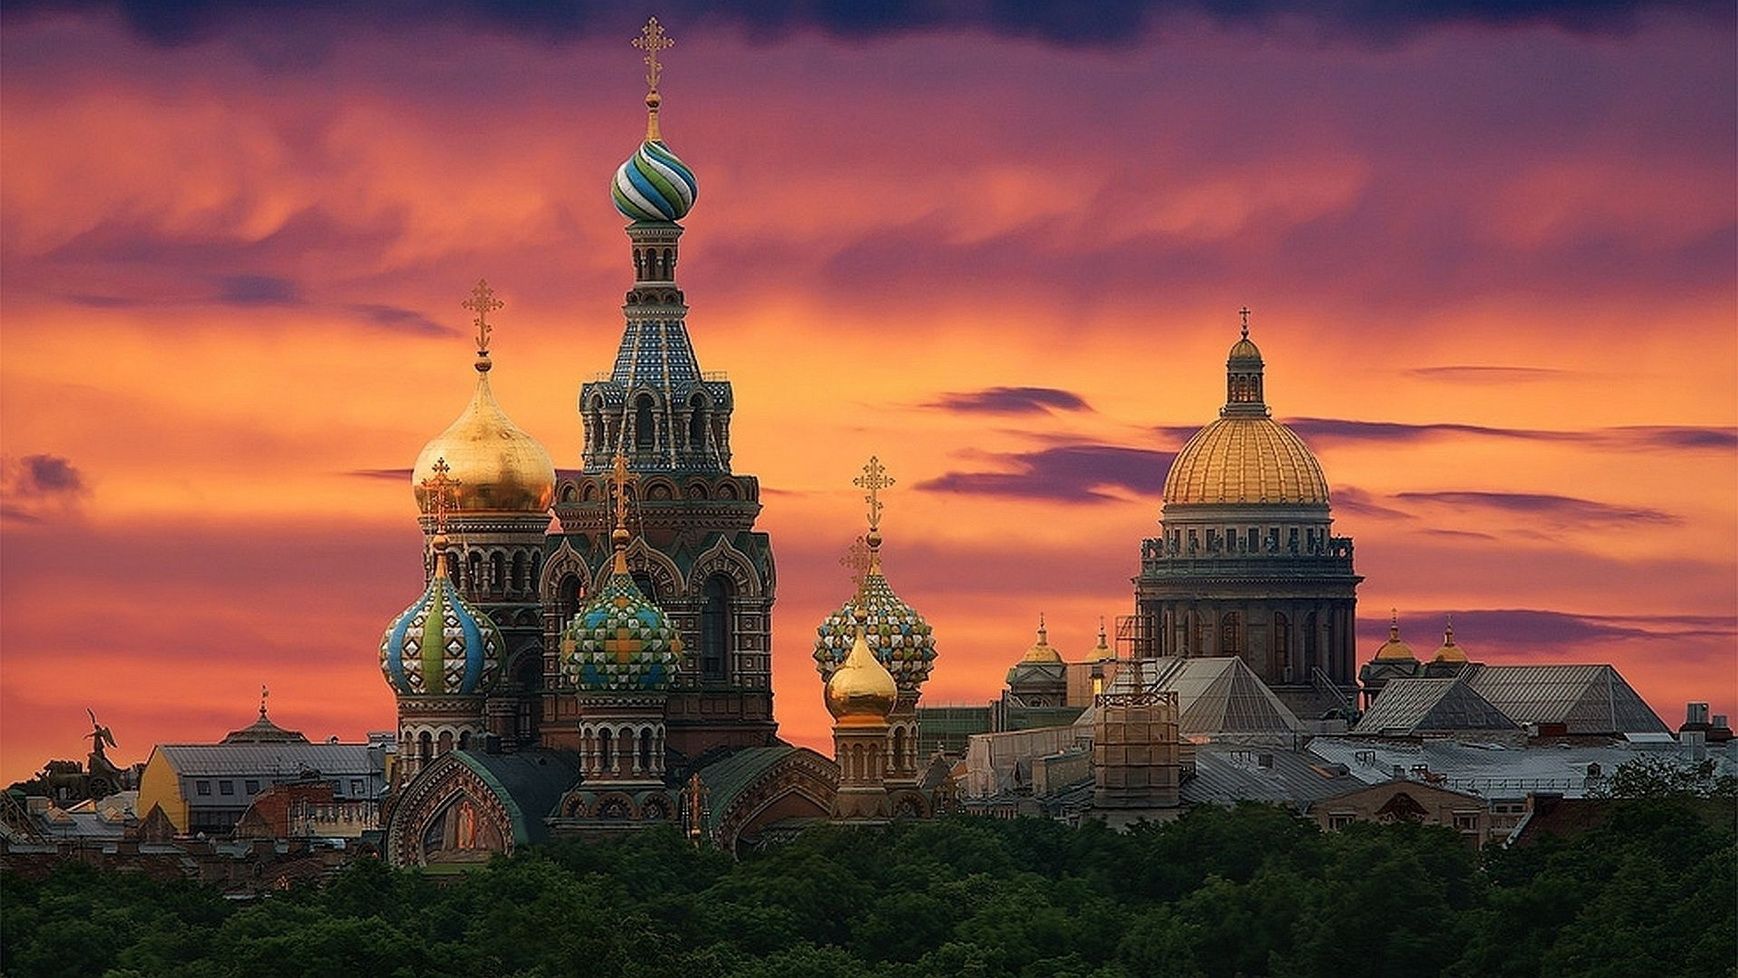 سنپترزبورگ (Saint Petersburg)